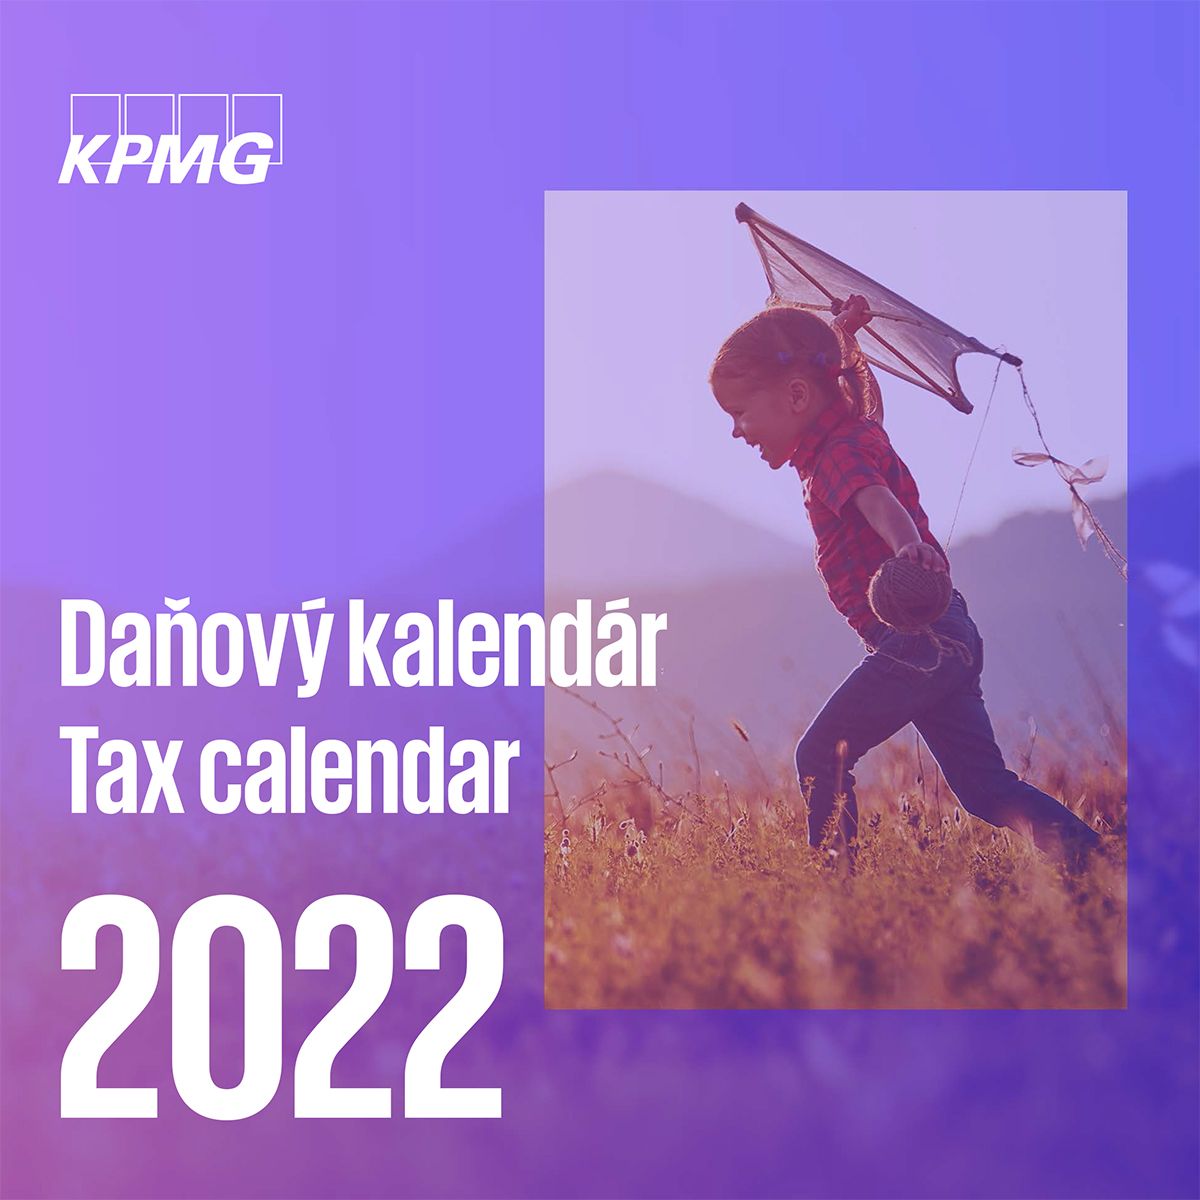 KPMG daňový kalendár